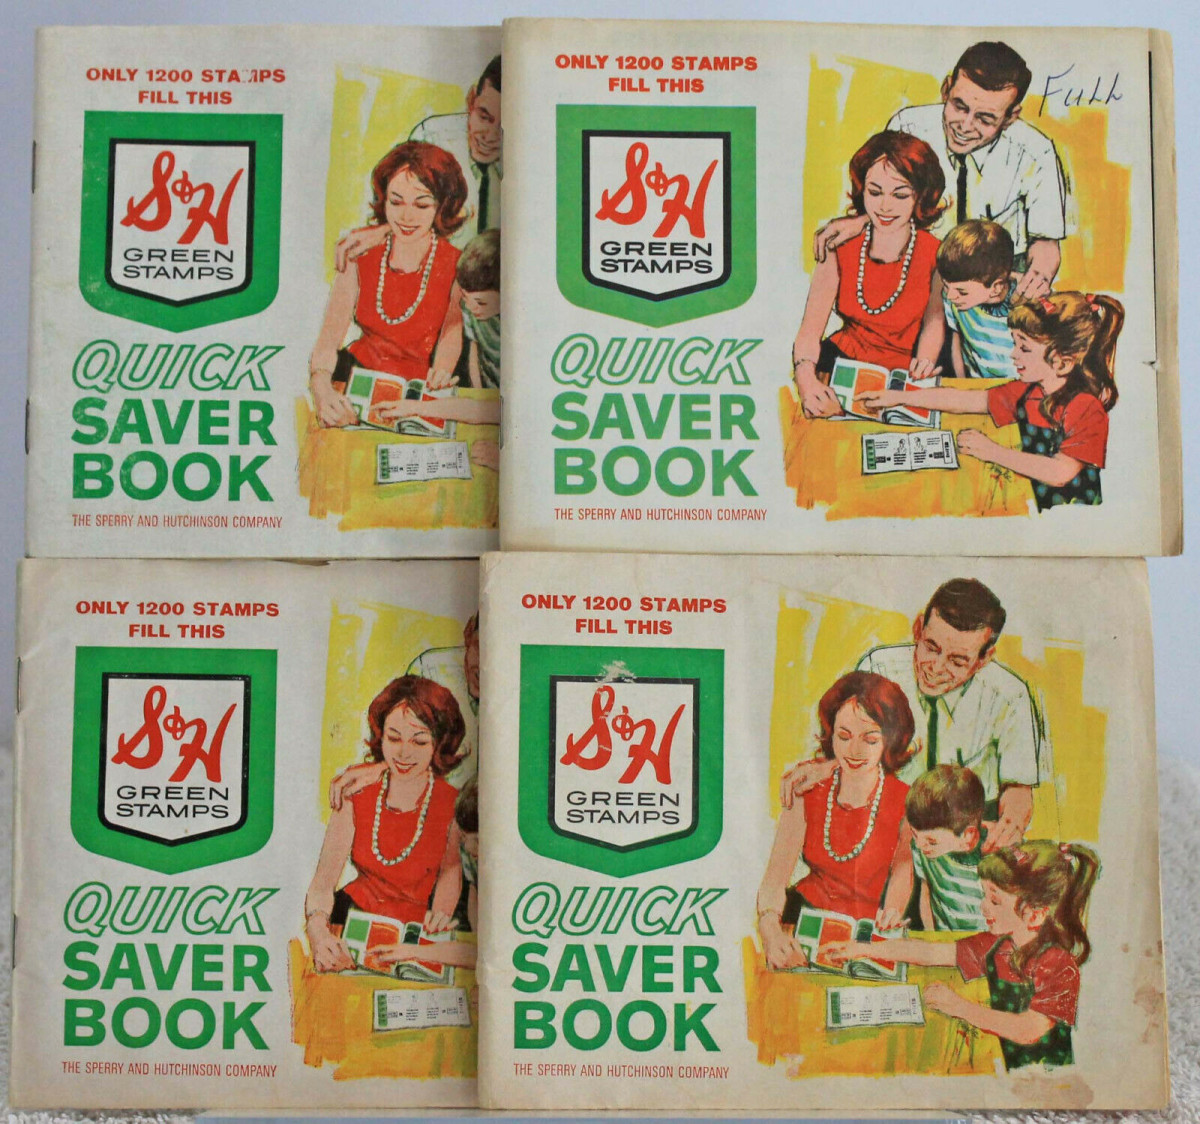 eBay seller mrneverending offered four stamp books for sale at $12 each.